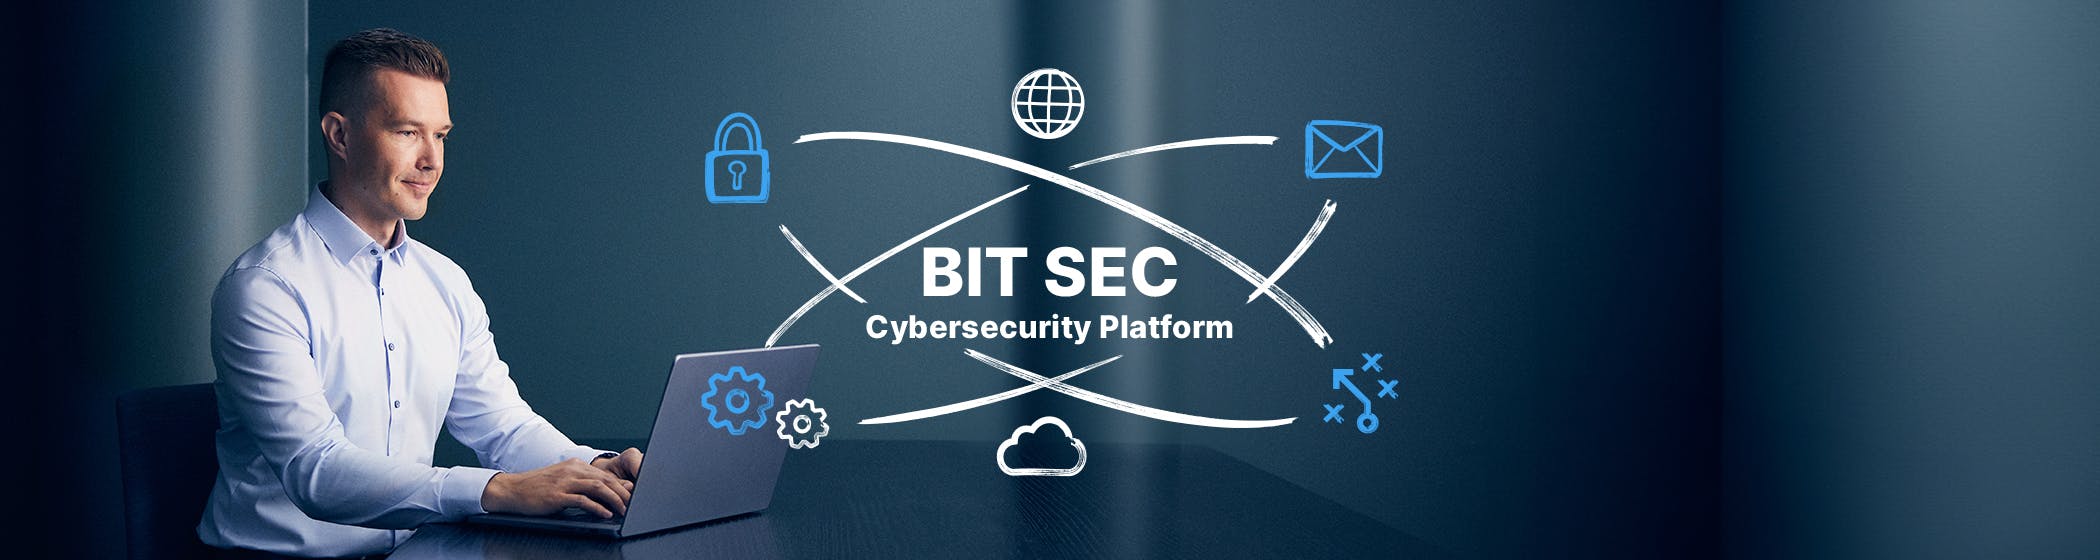 BIT SEC Cybersecurity Platform product image